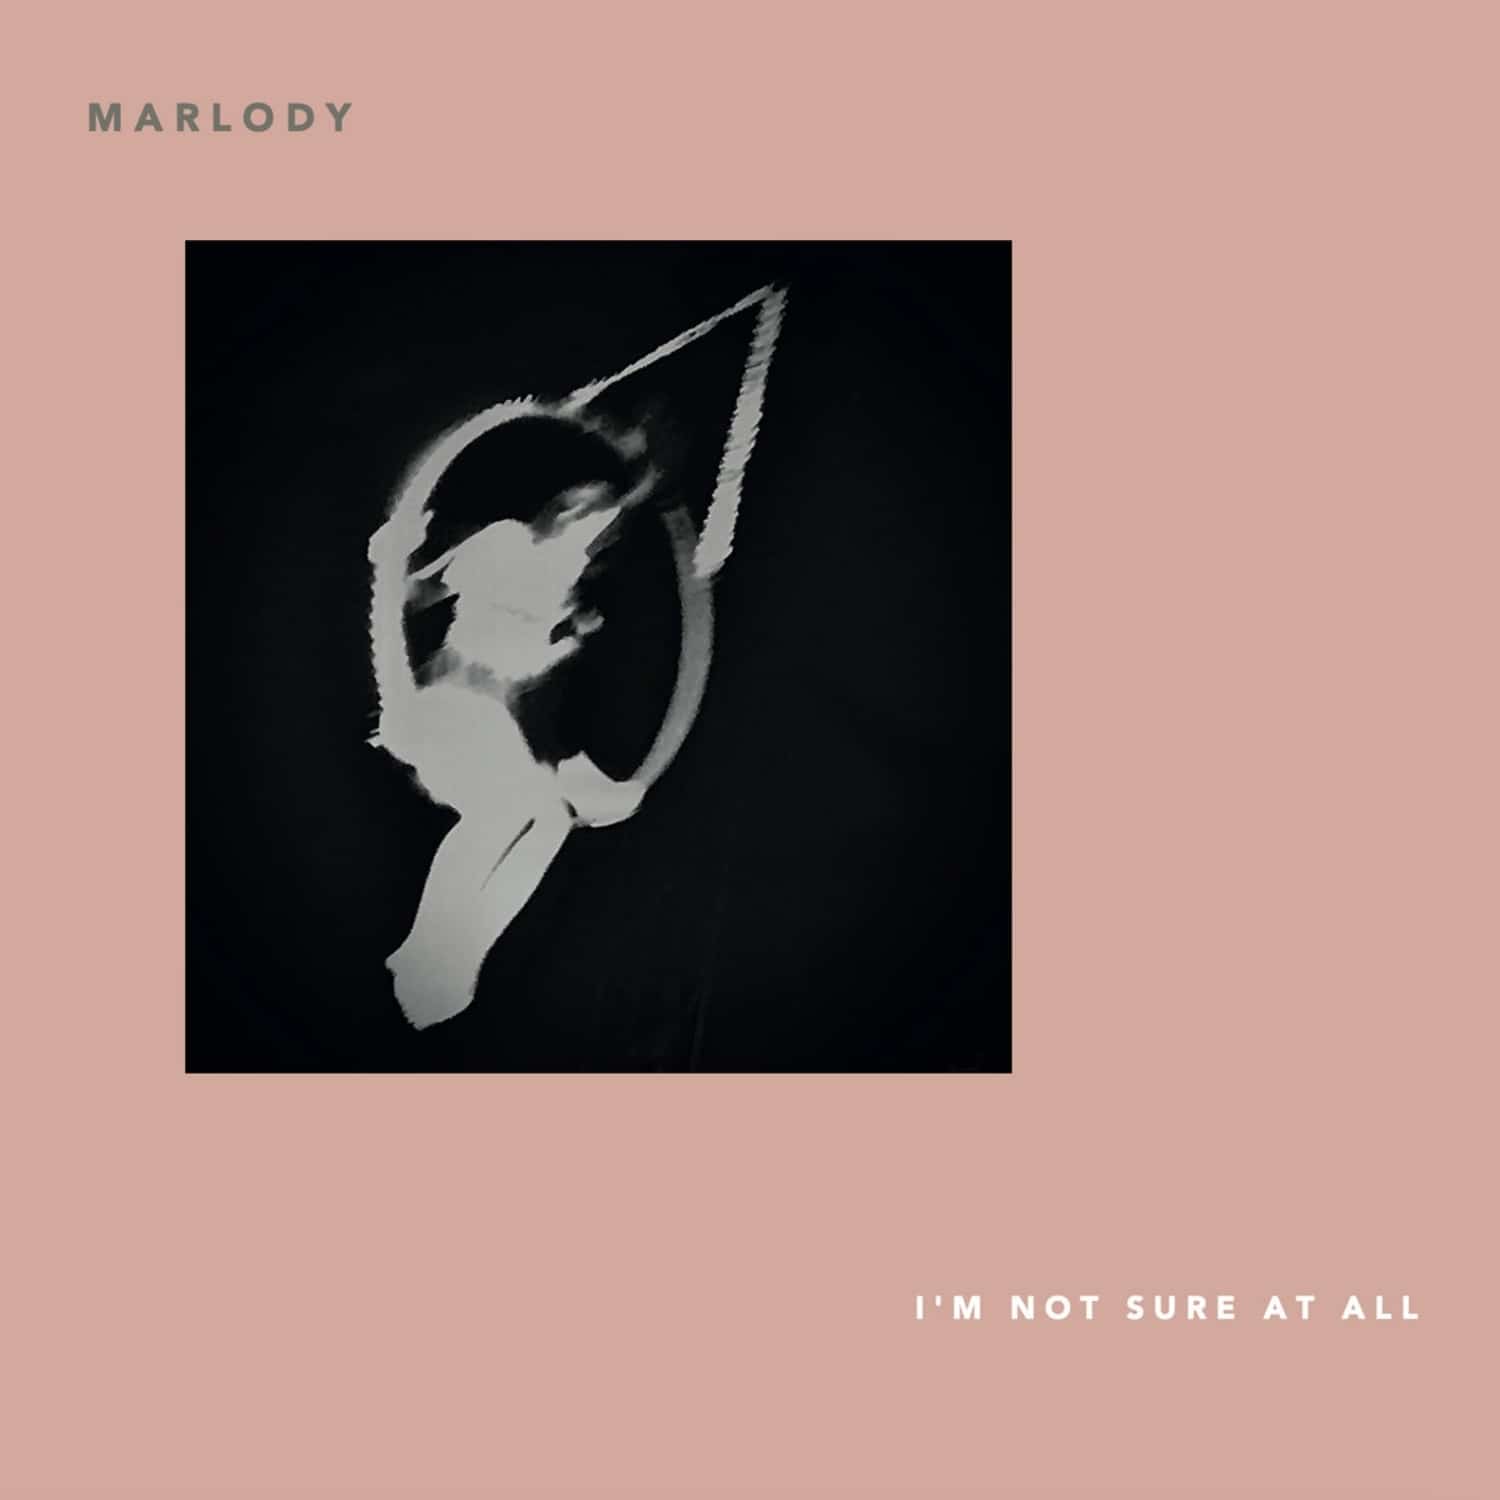 Marlody - I M NOT SURE AT ALL 